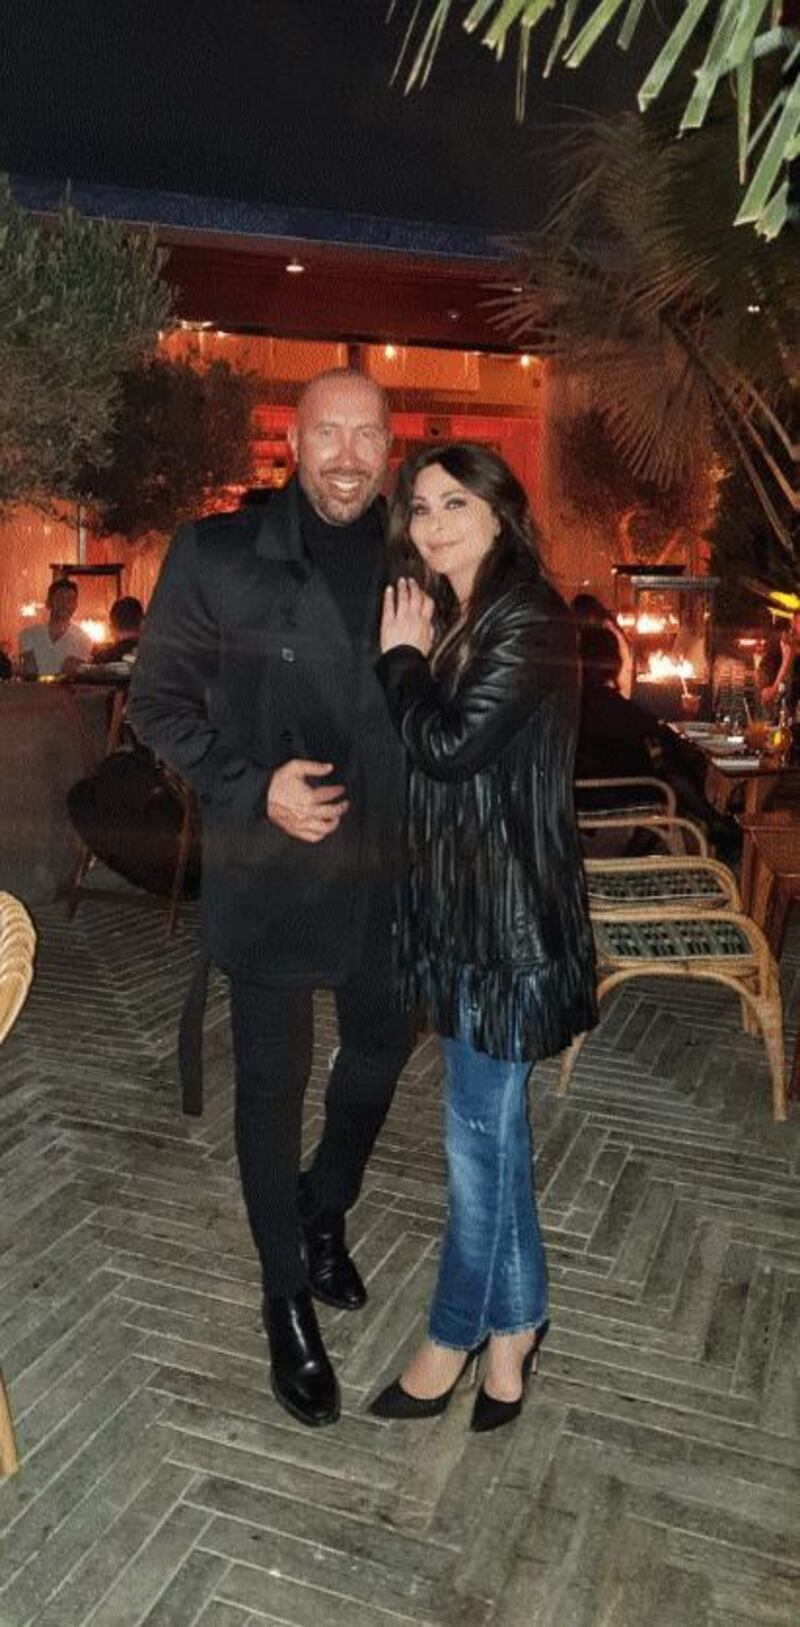 Lebanese singer Elissa enjoyed dinner at La Cantine du Faubourg with friends. Twitter / Elissa